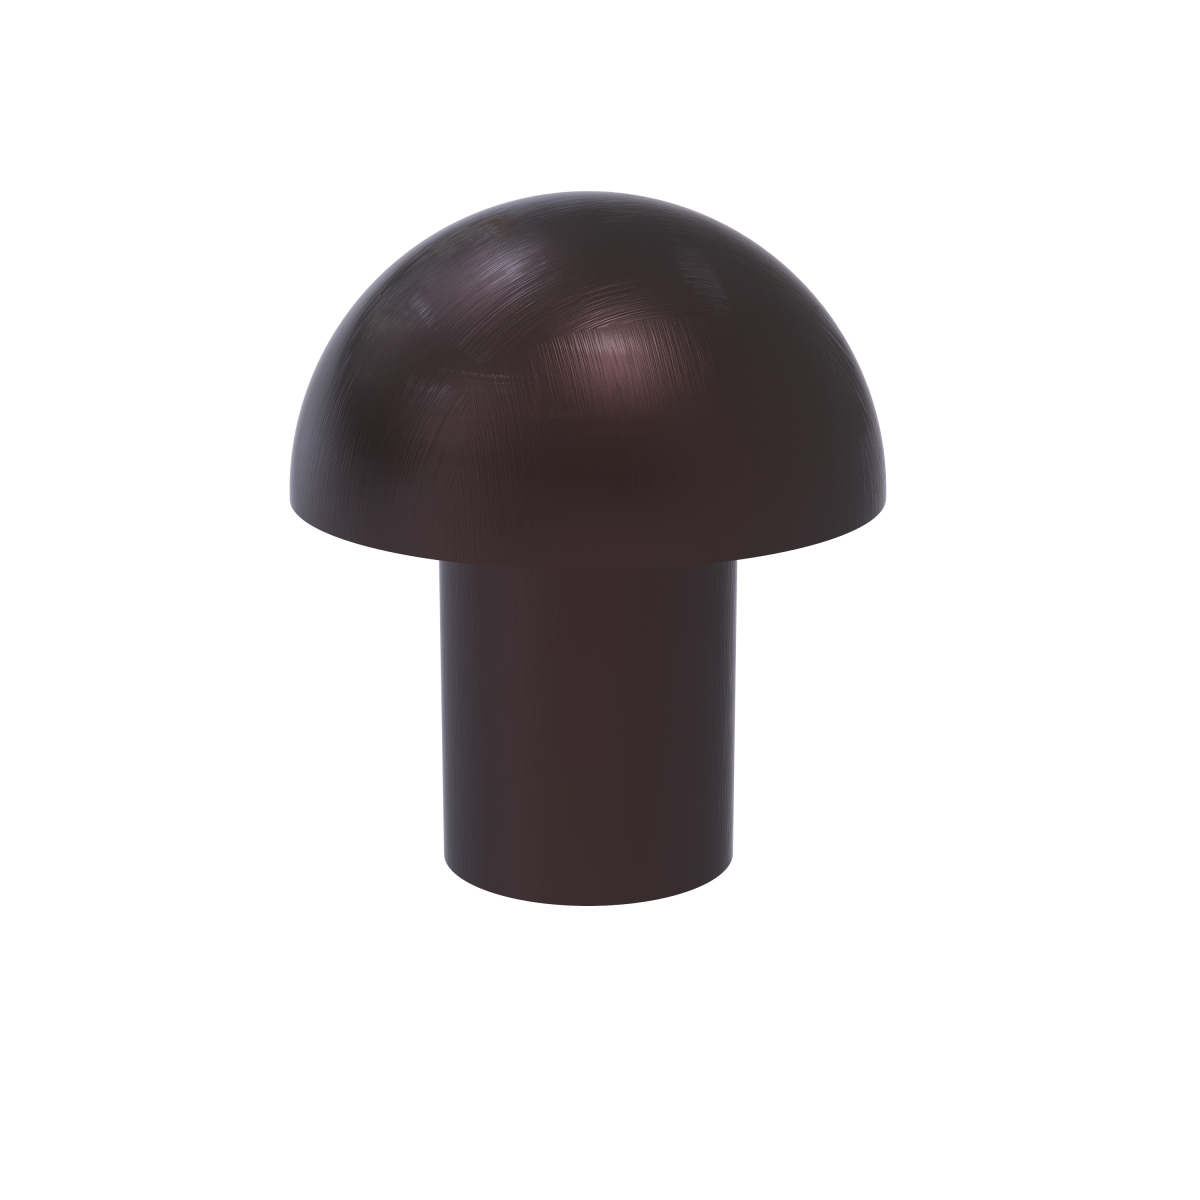 106-abz 1 In. Round Mushroom Cabinet Knob, Antique Bronze